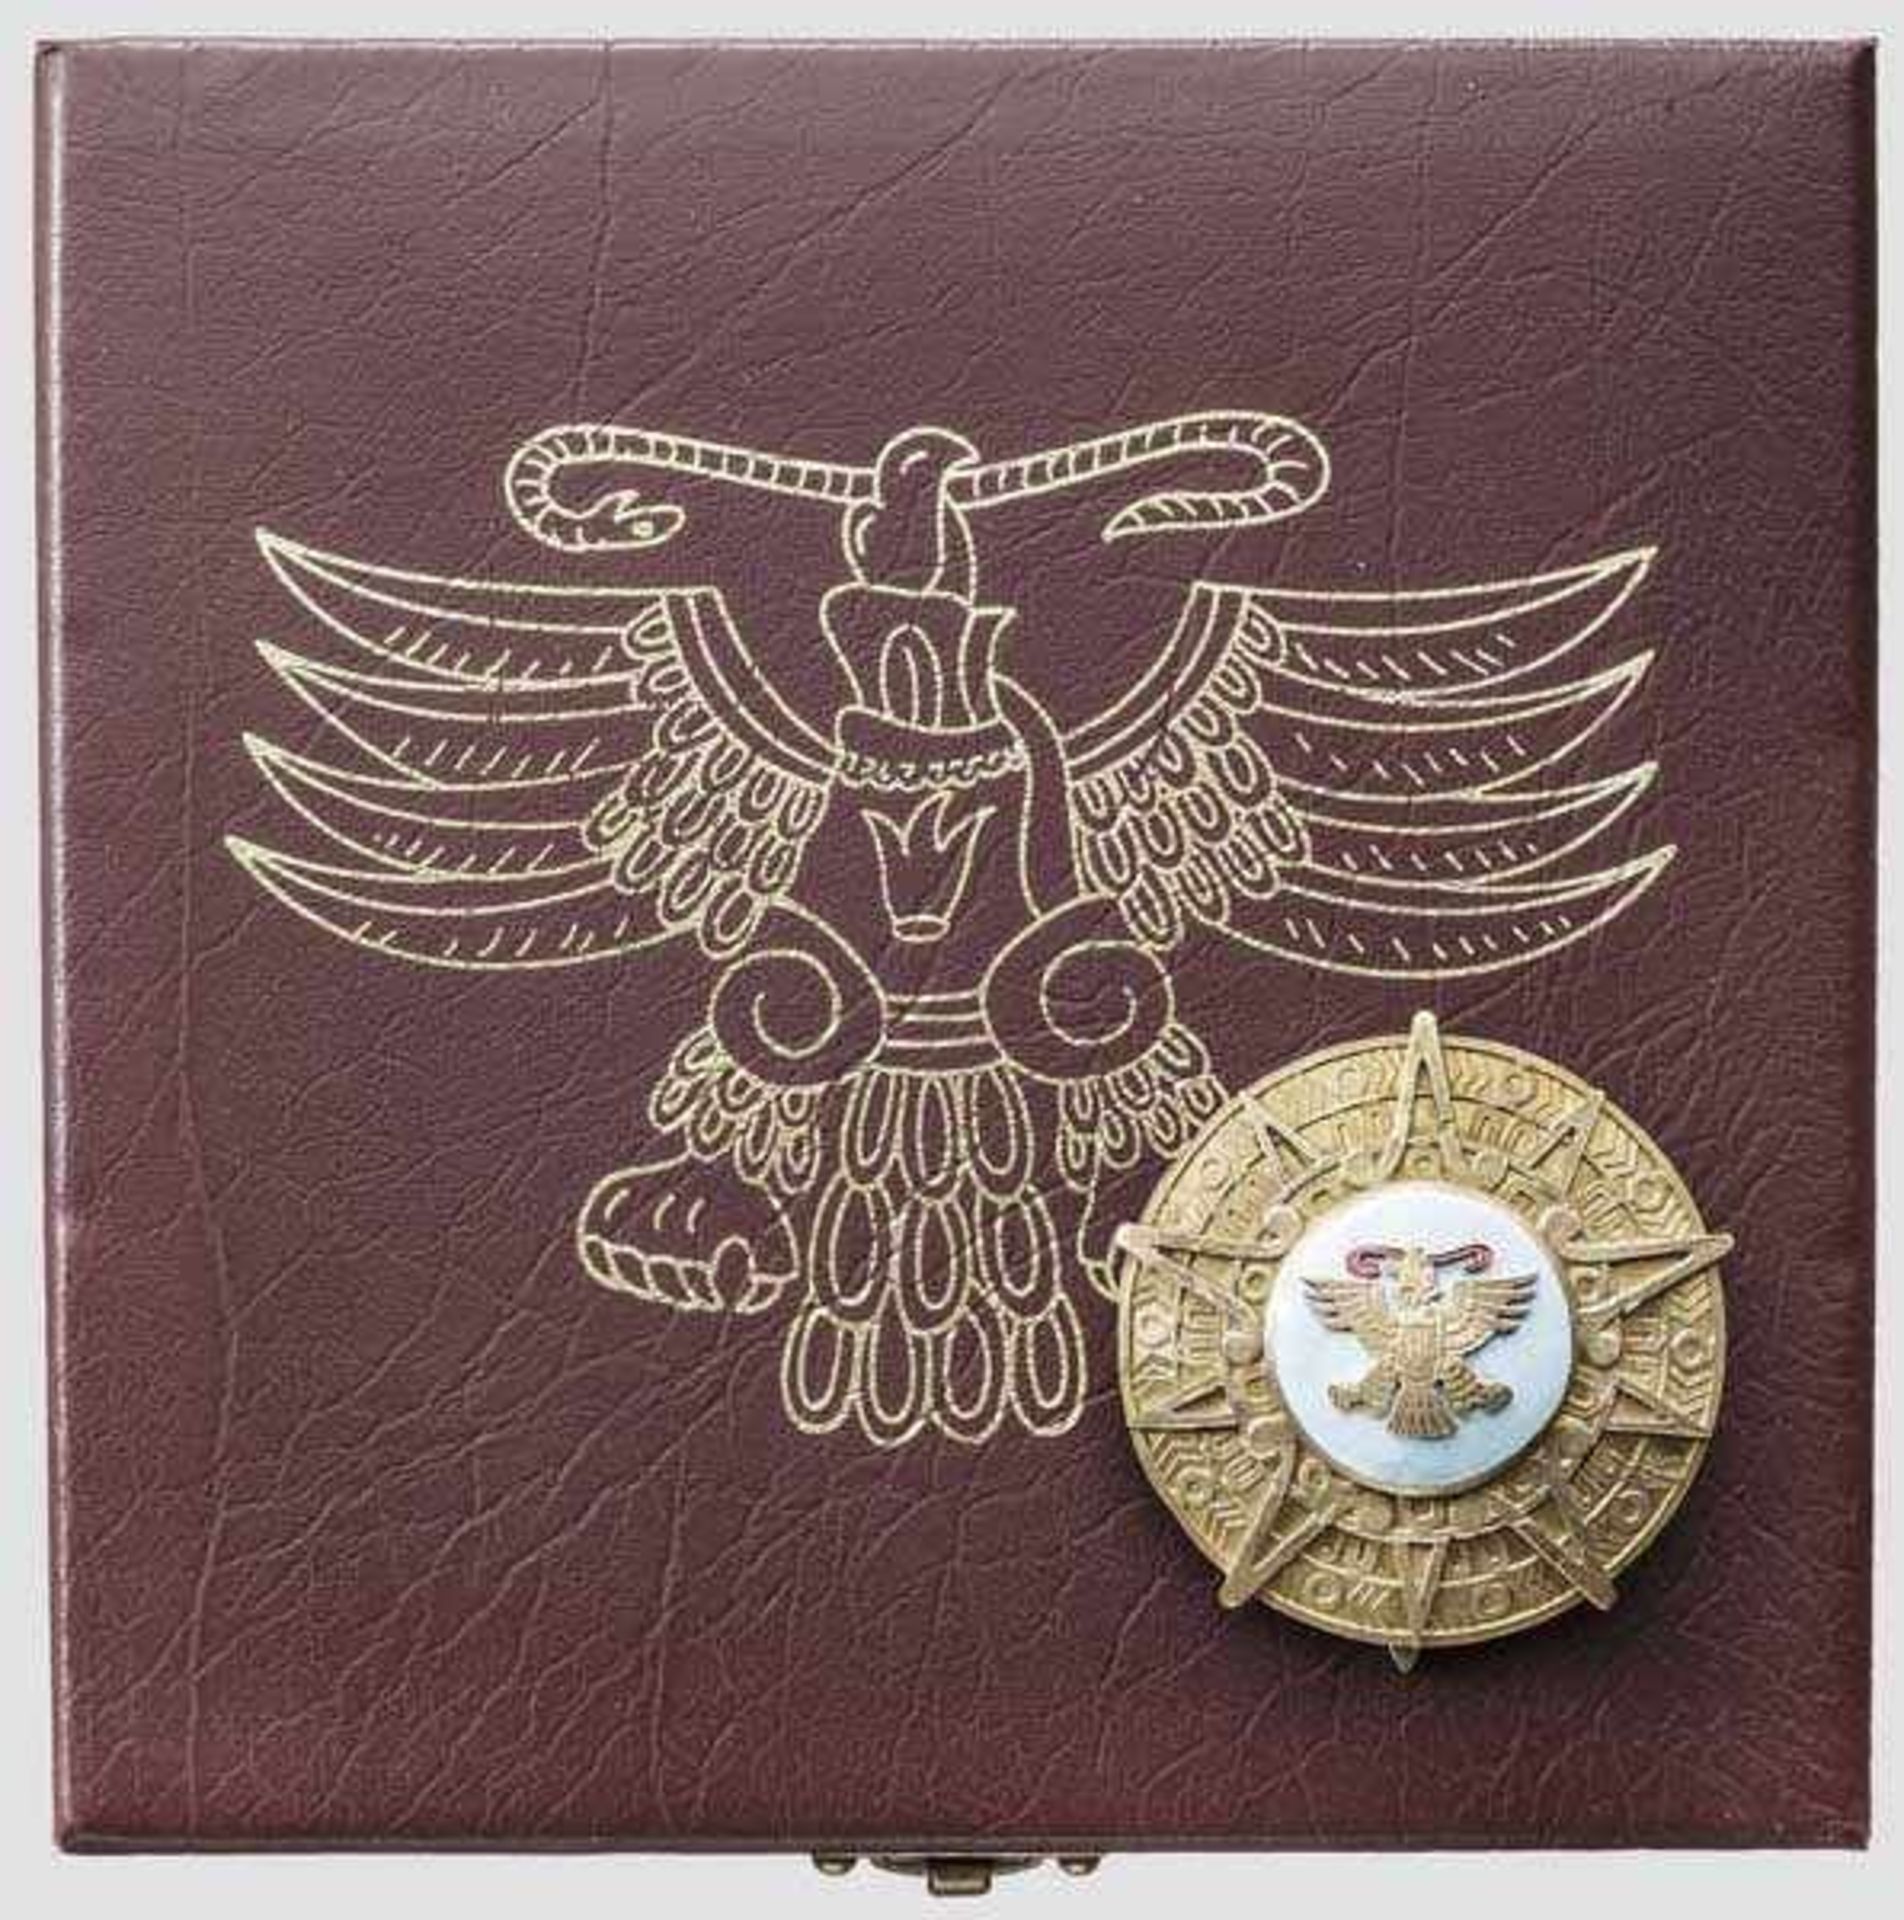 Orden des Azteken-Adlers (Orden Mexicana del Águila Azteca) - Bruststern im Etui In Silber ("925")